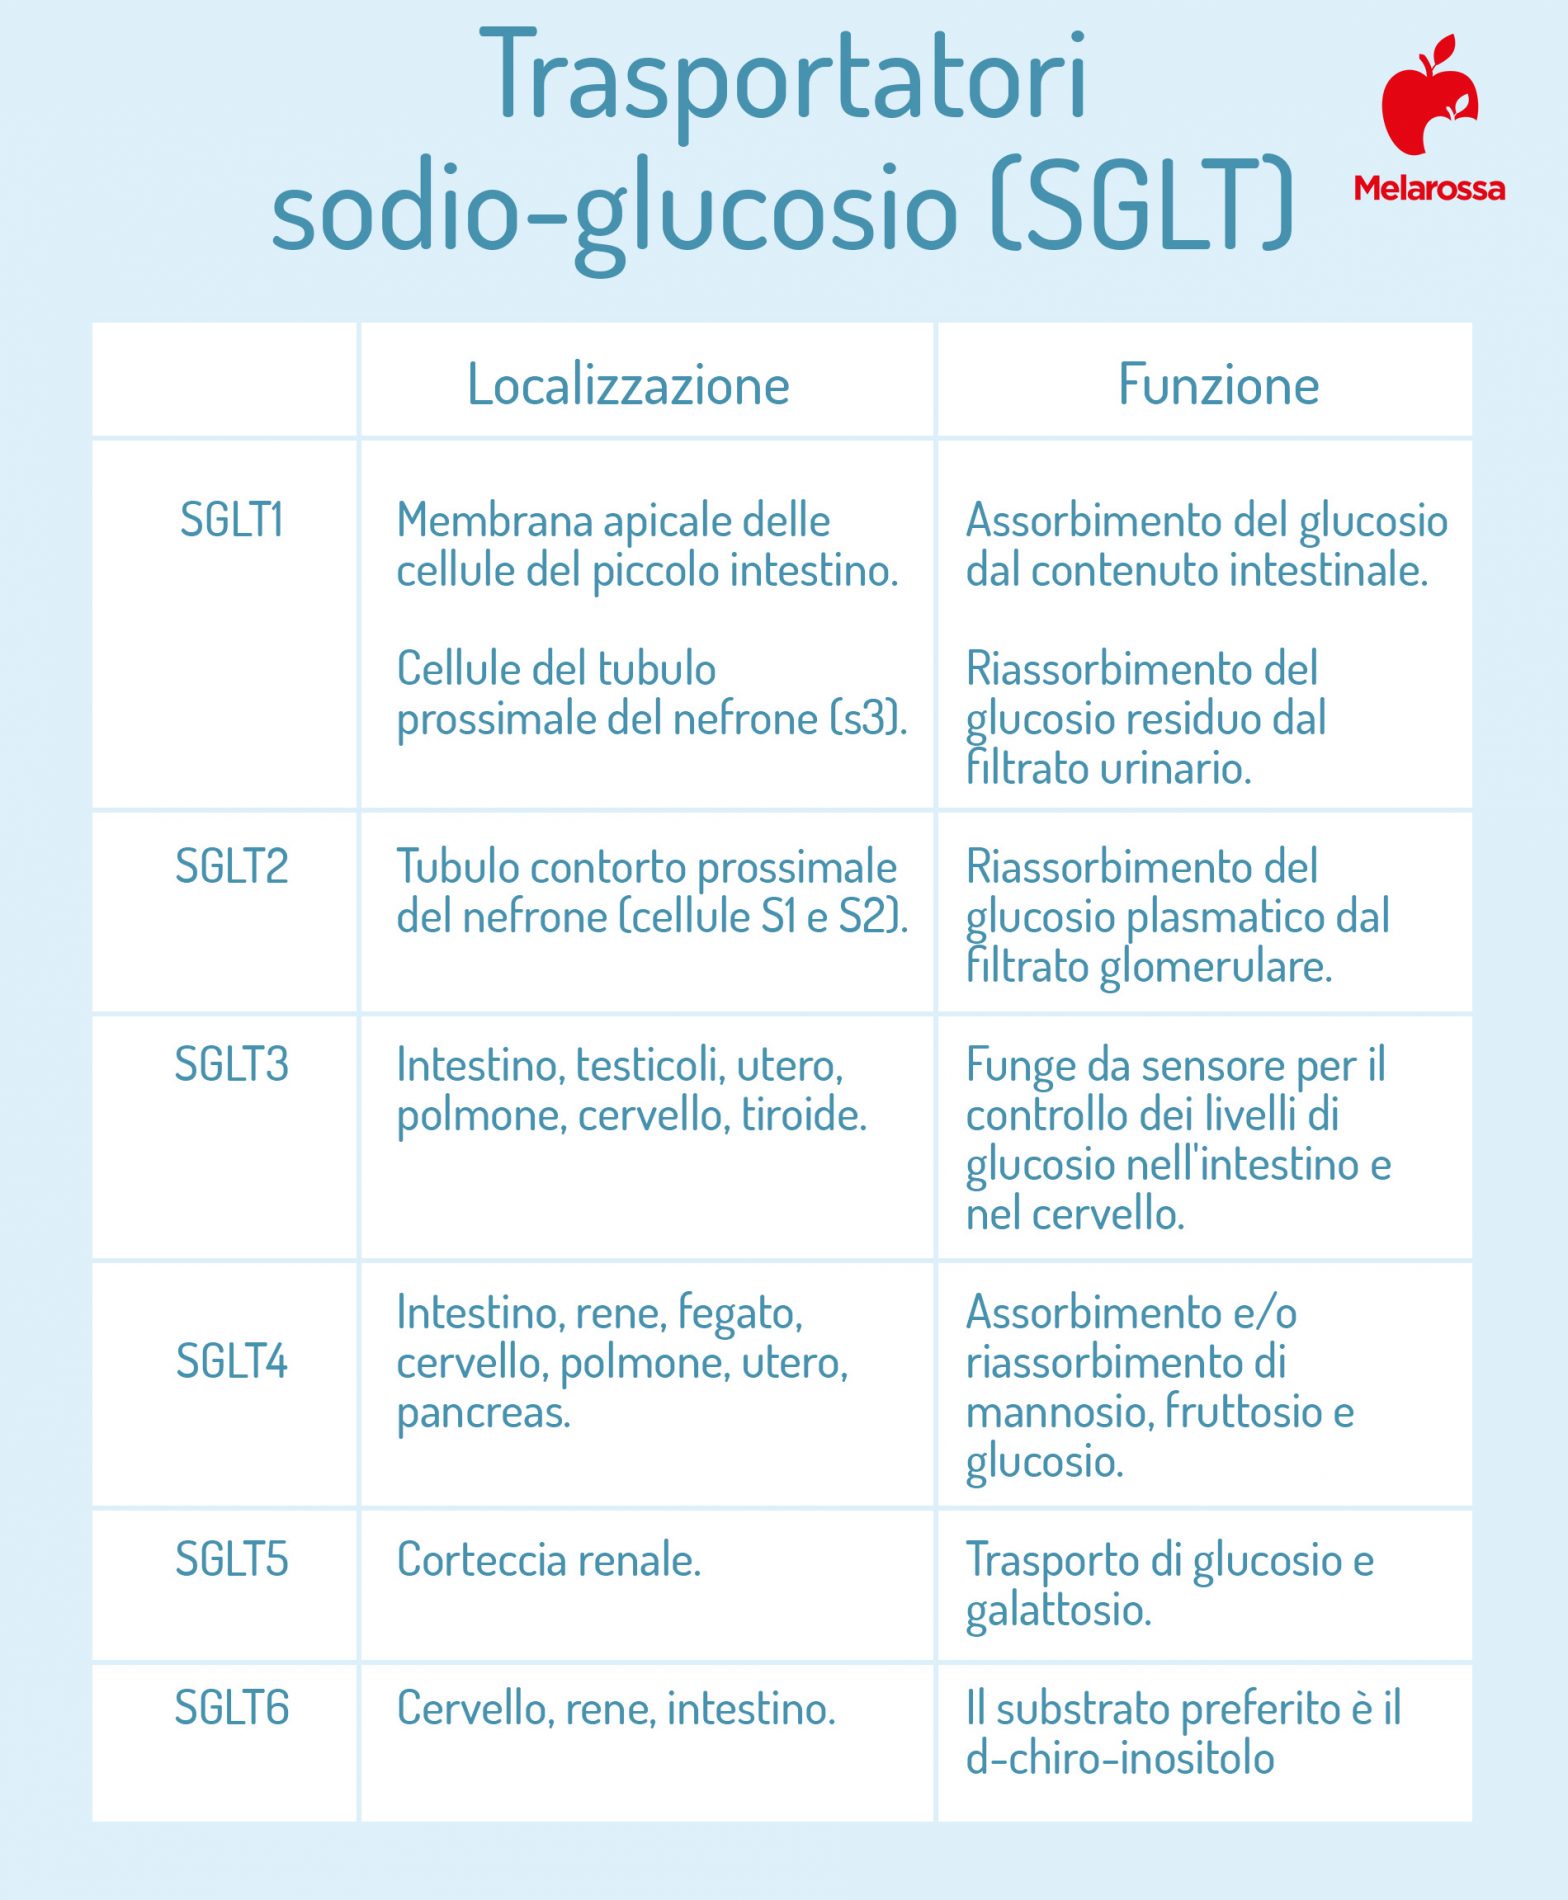 glucosio trasportatori sodio glucosio SGLT